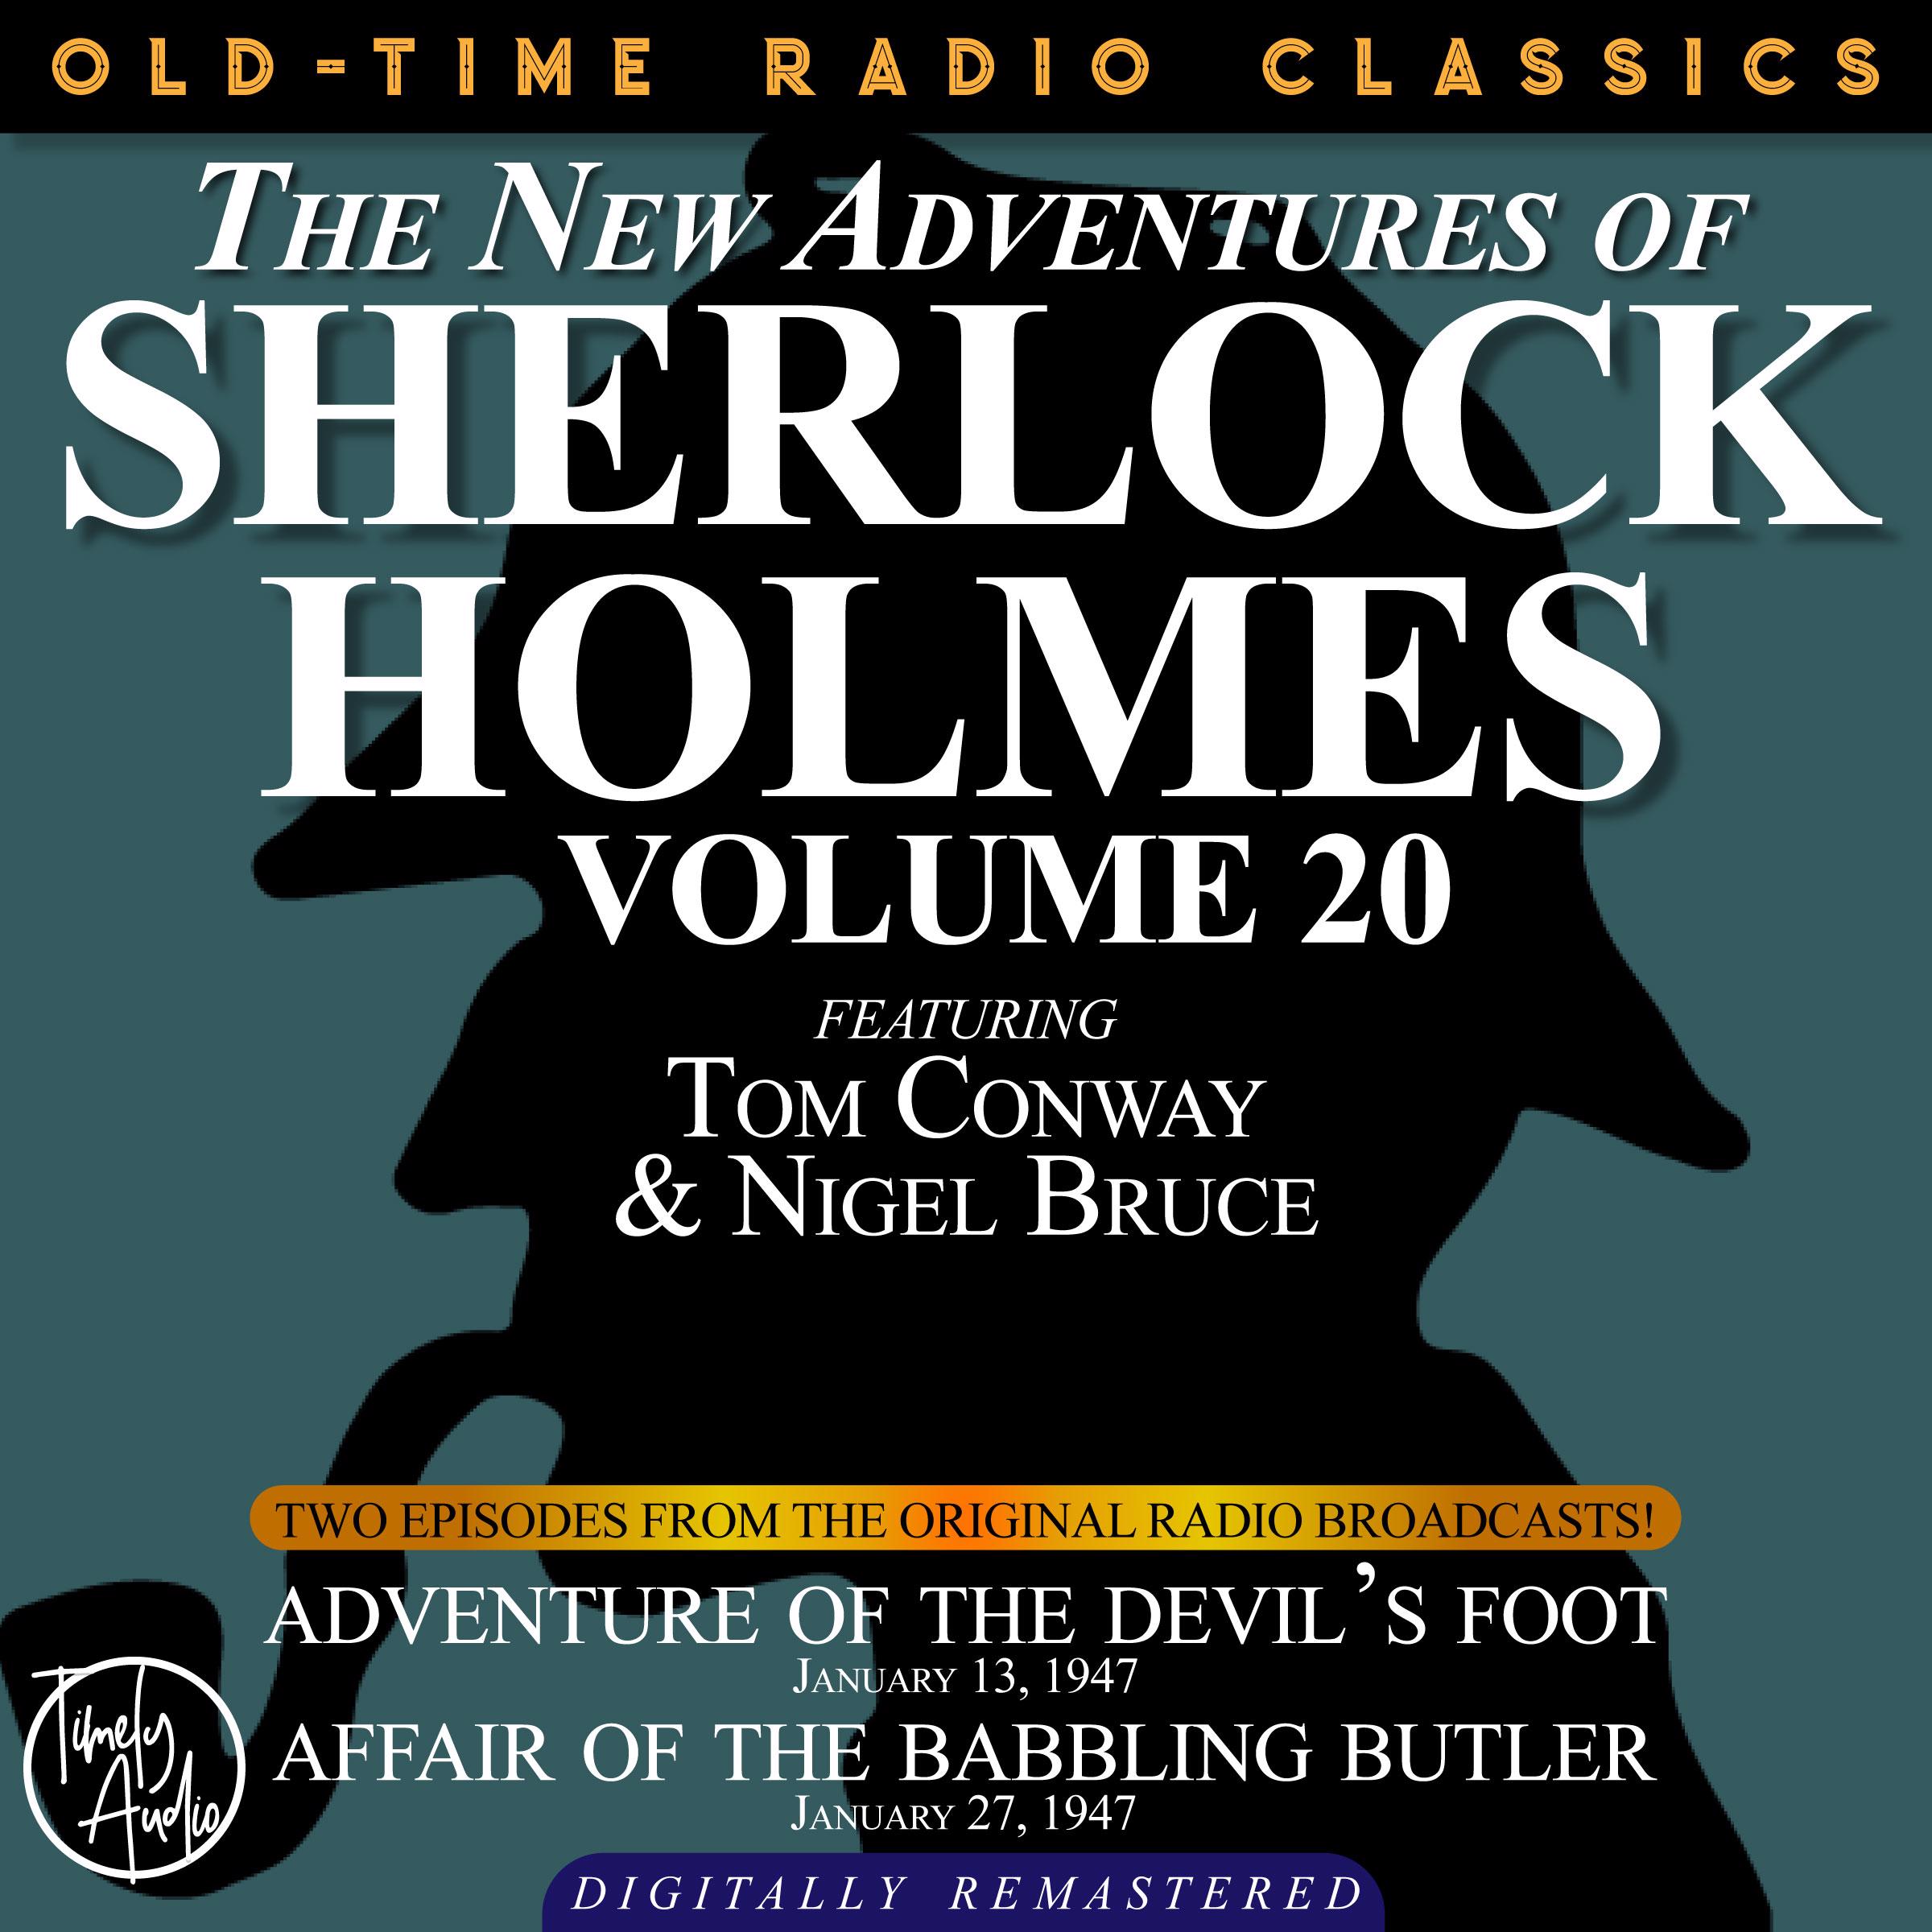 THE NEW ADVENTURES OF SHERLOCK HOLMES, VOLUME 20